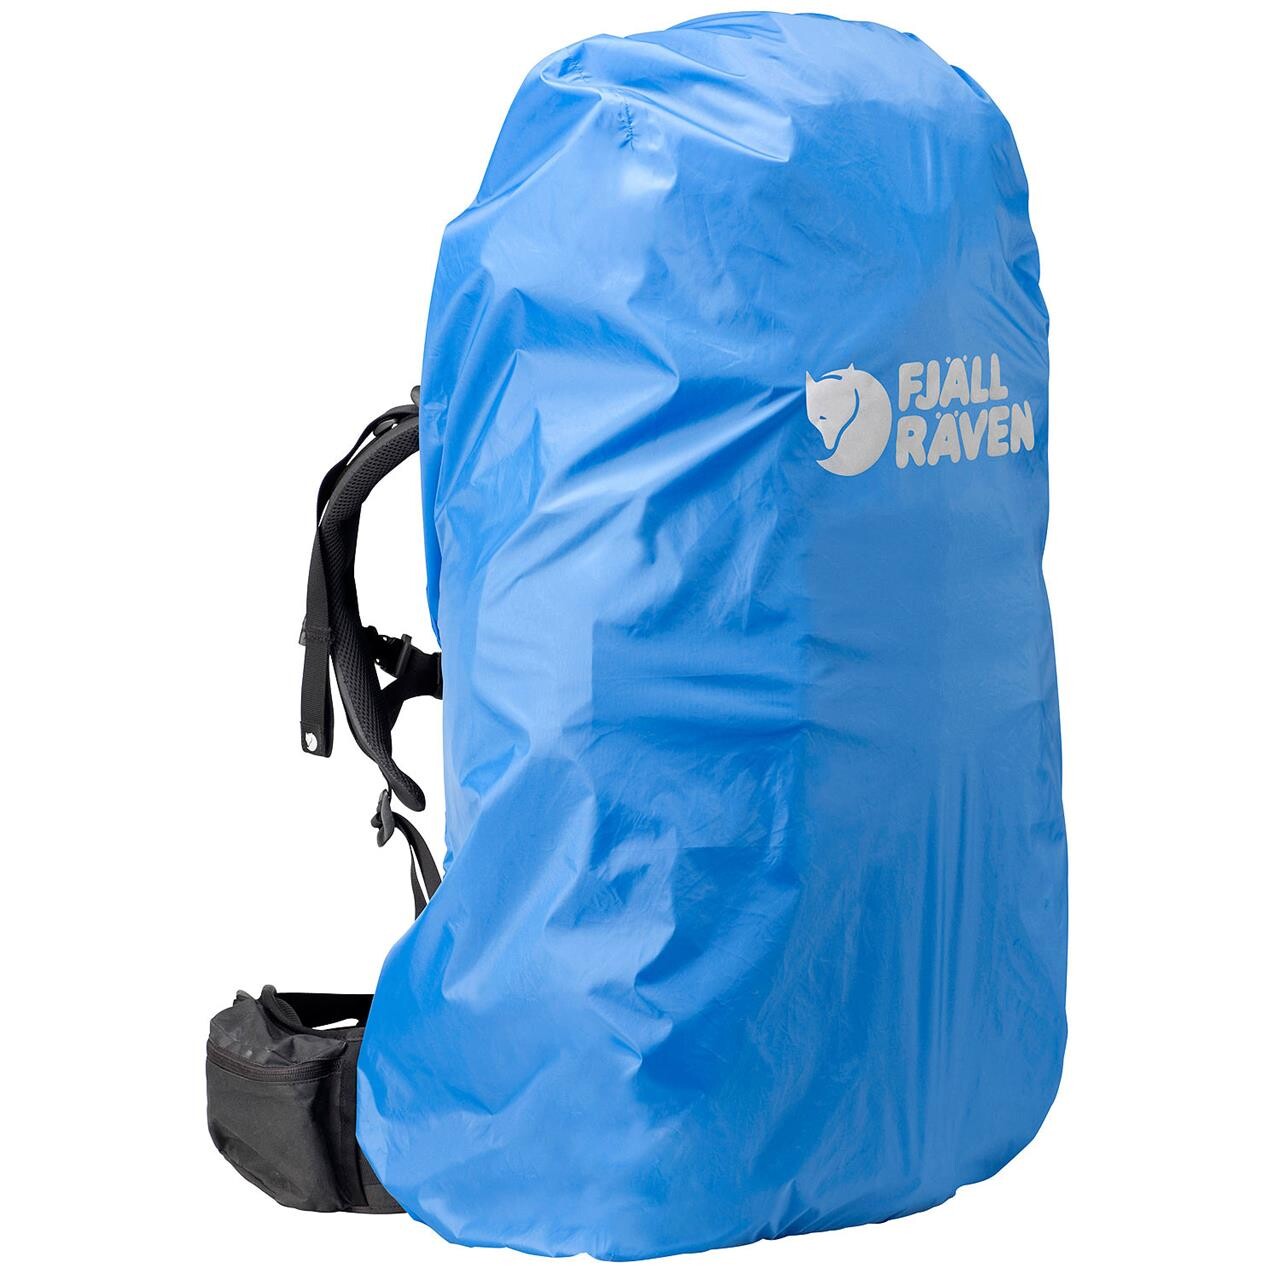 4: Fjällräven Rain Cover / regnslag 60-75 L, UN blue - Regnslag til rygsæk, vandpose mm.